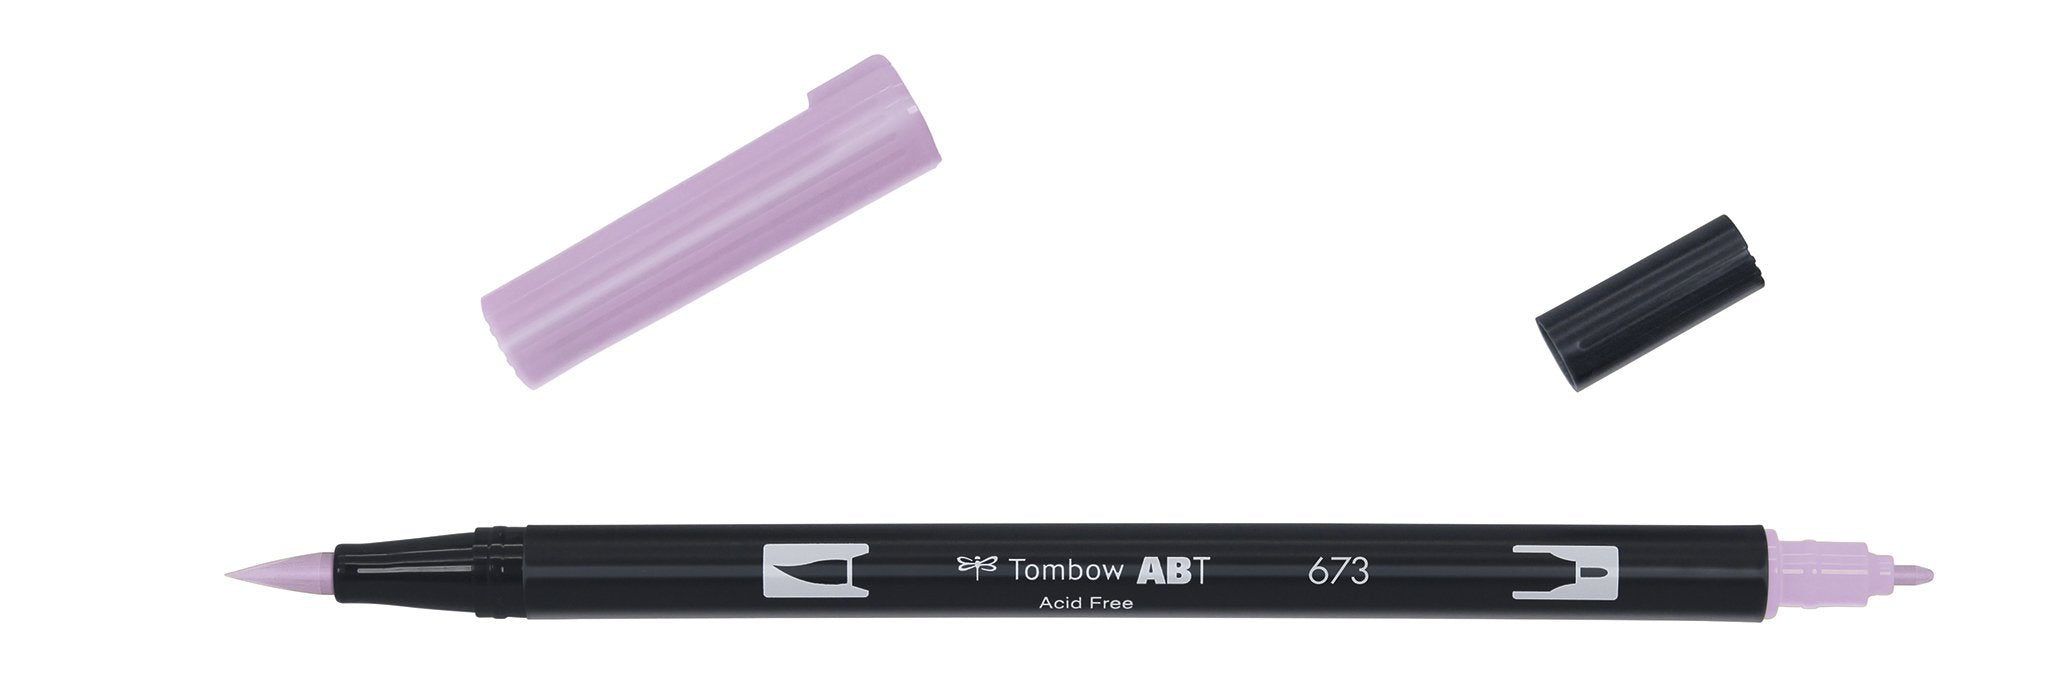 Tombow - ABT Dual Brush Pen - Orchid-Stift-DutchMills